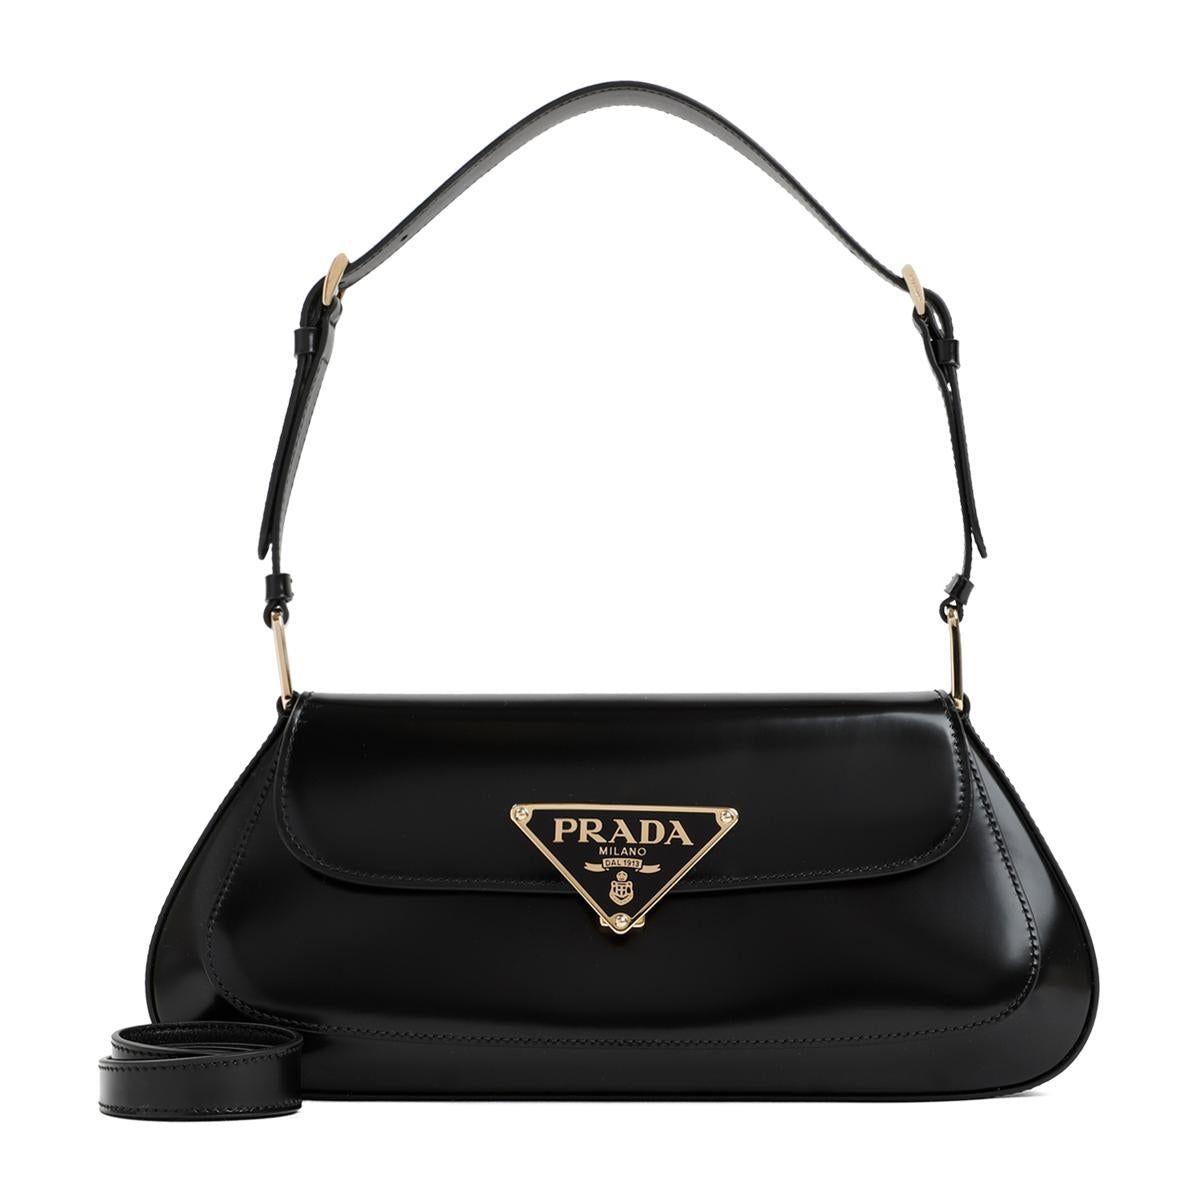 Prada Patent Calf Leather Handbag in Black